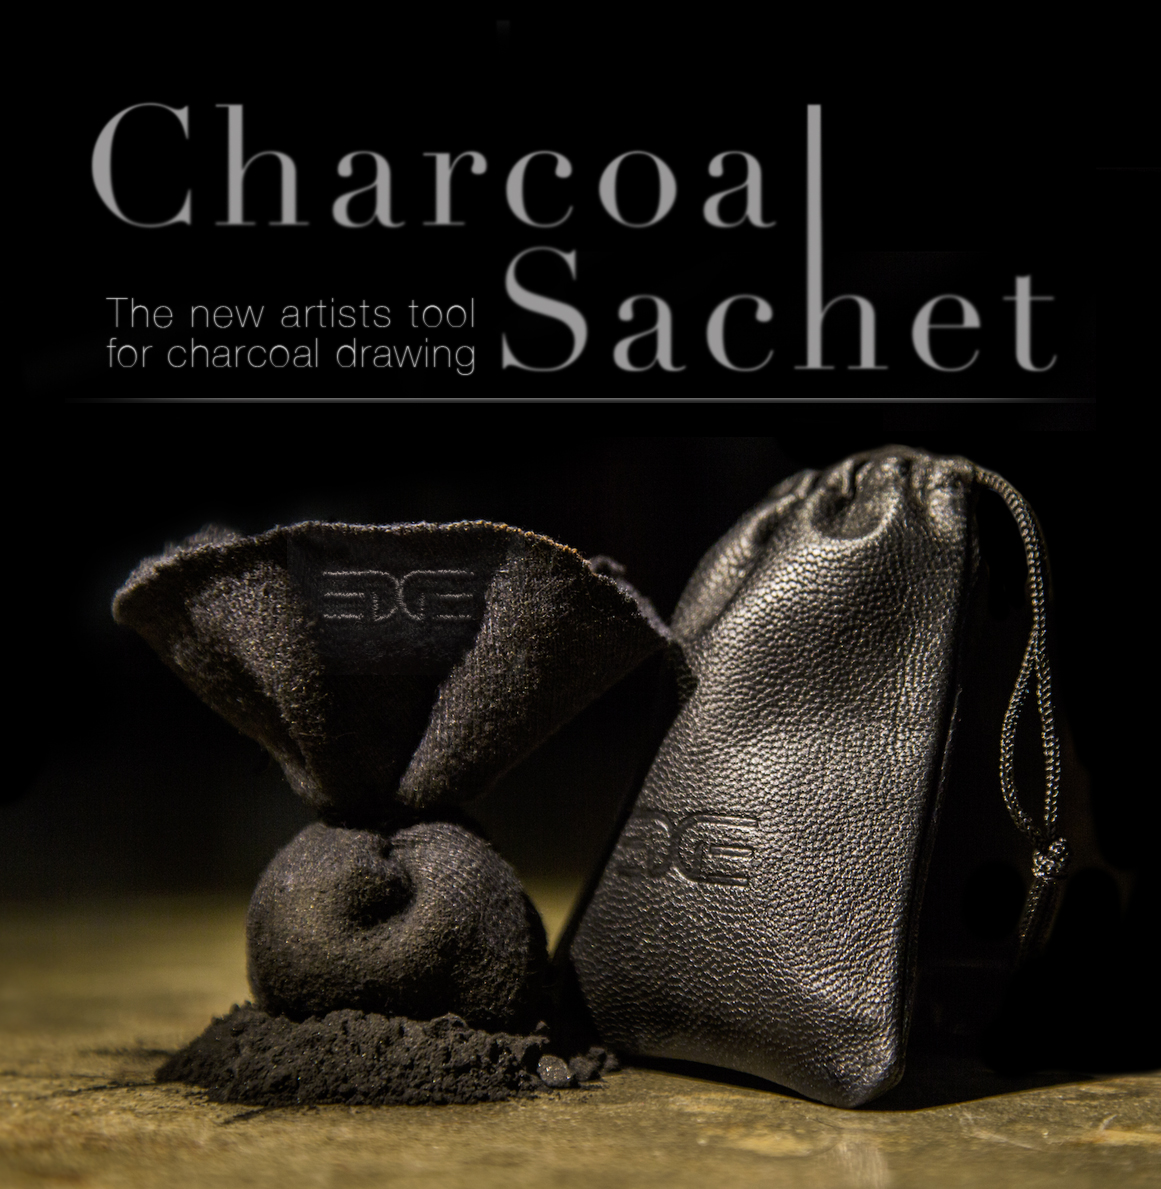 Charcoal Sachet — Edge Pro Gear